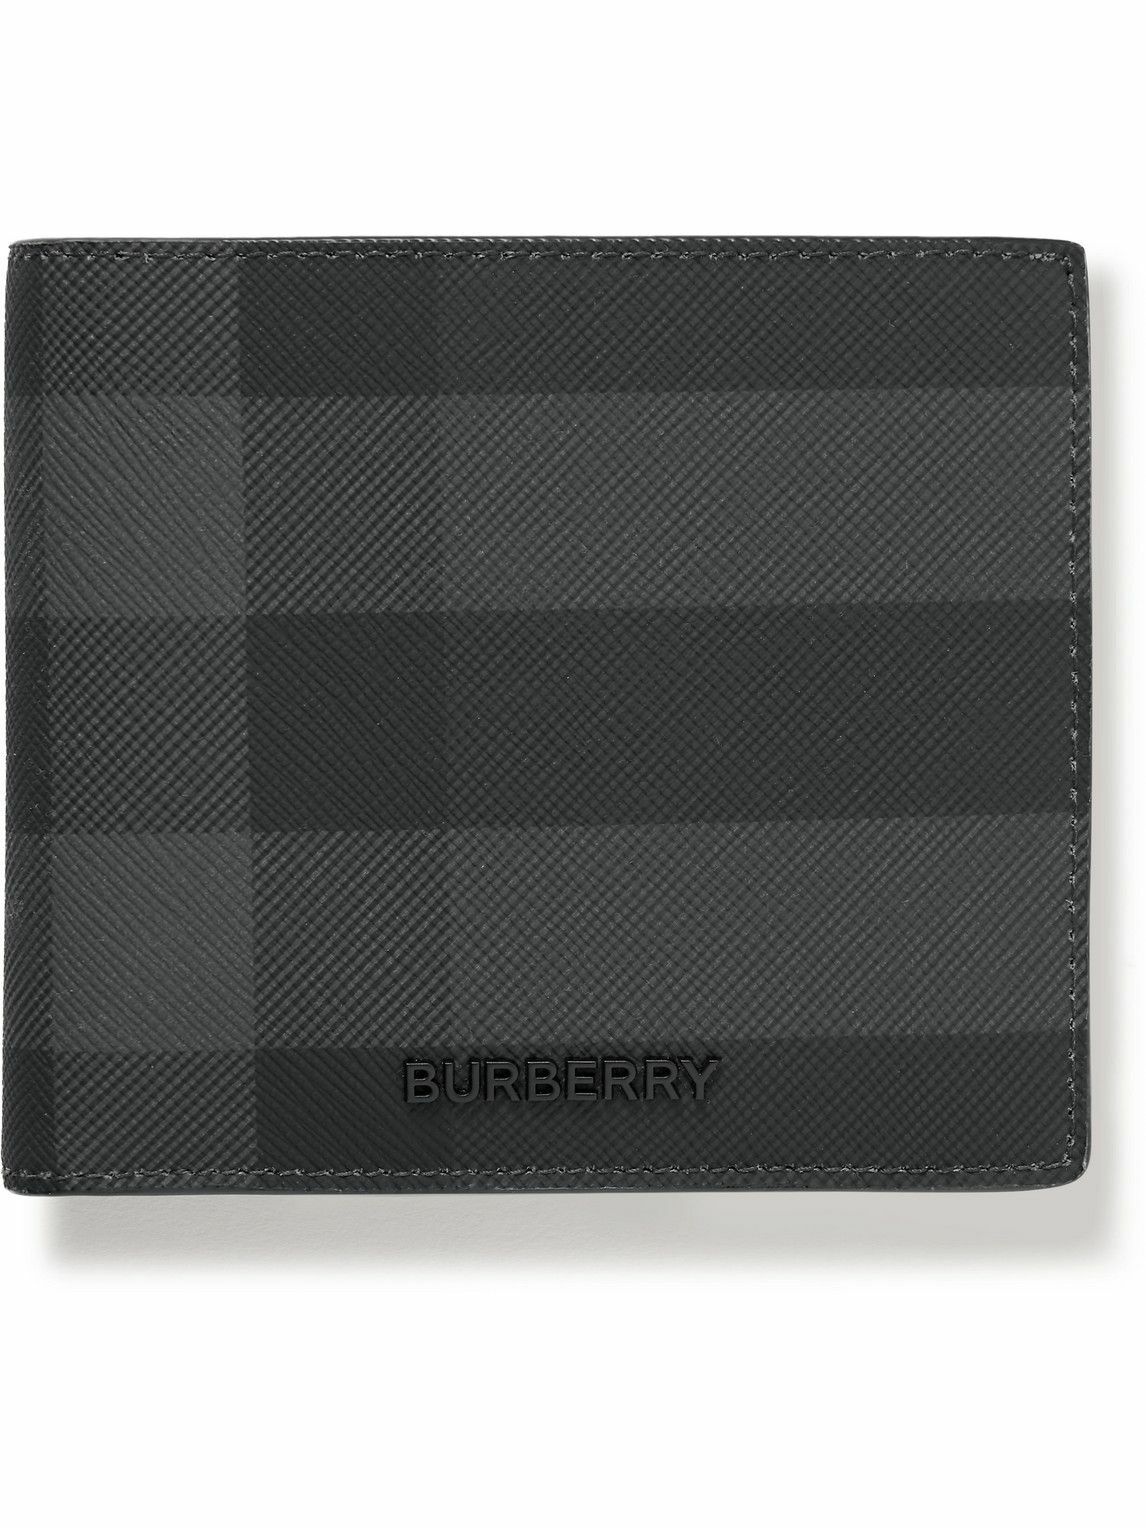 Burberry Men's Check Billfold Wallet